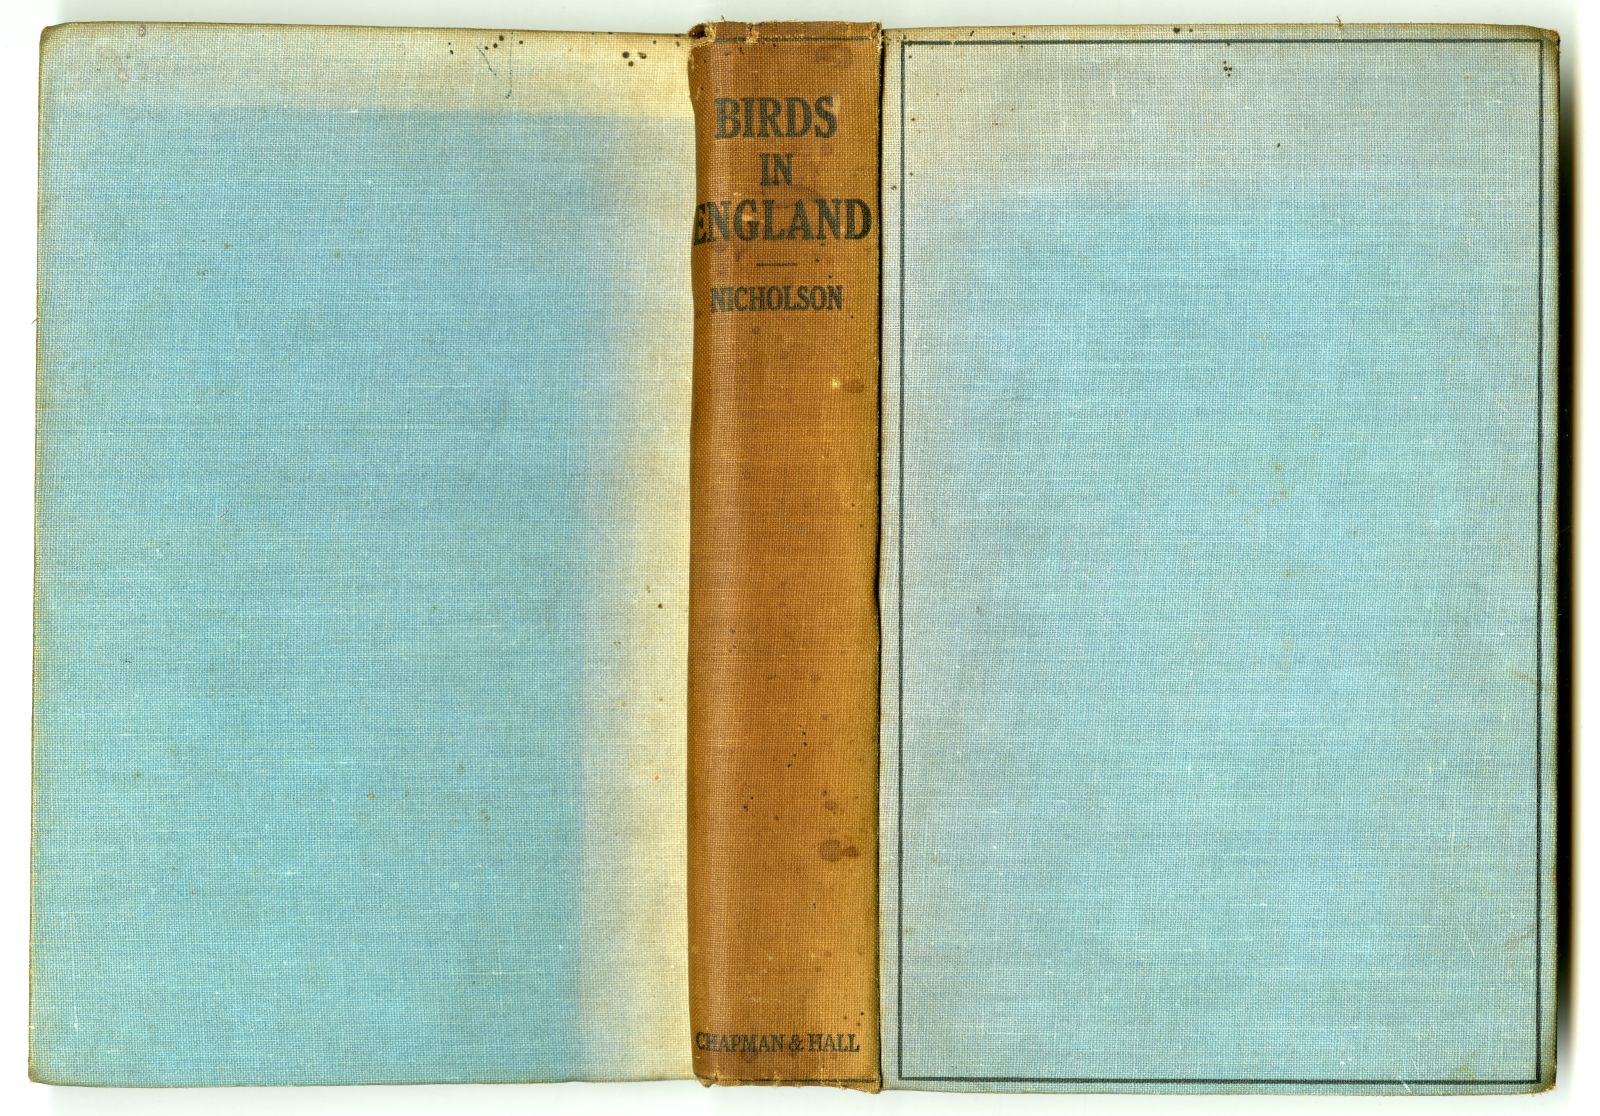 『BIRDS IN ENGLAND』（1926年、CHAPMAN AND HALL） の表紙